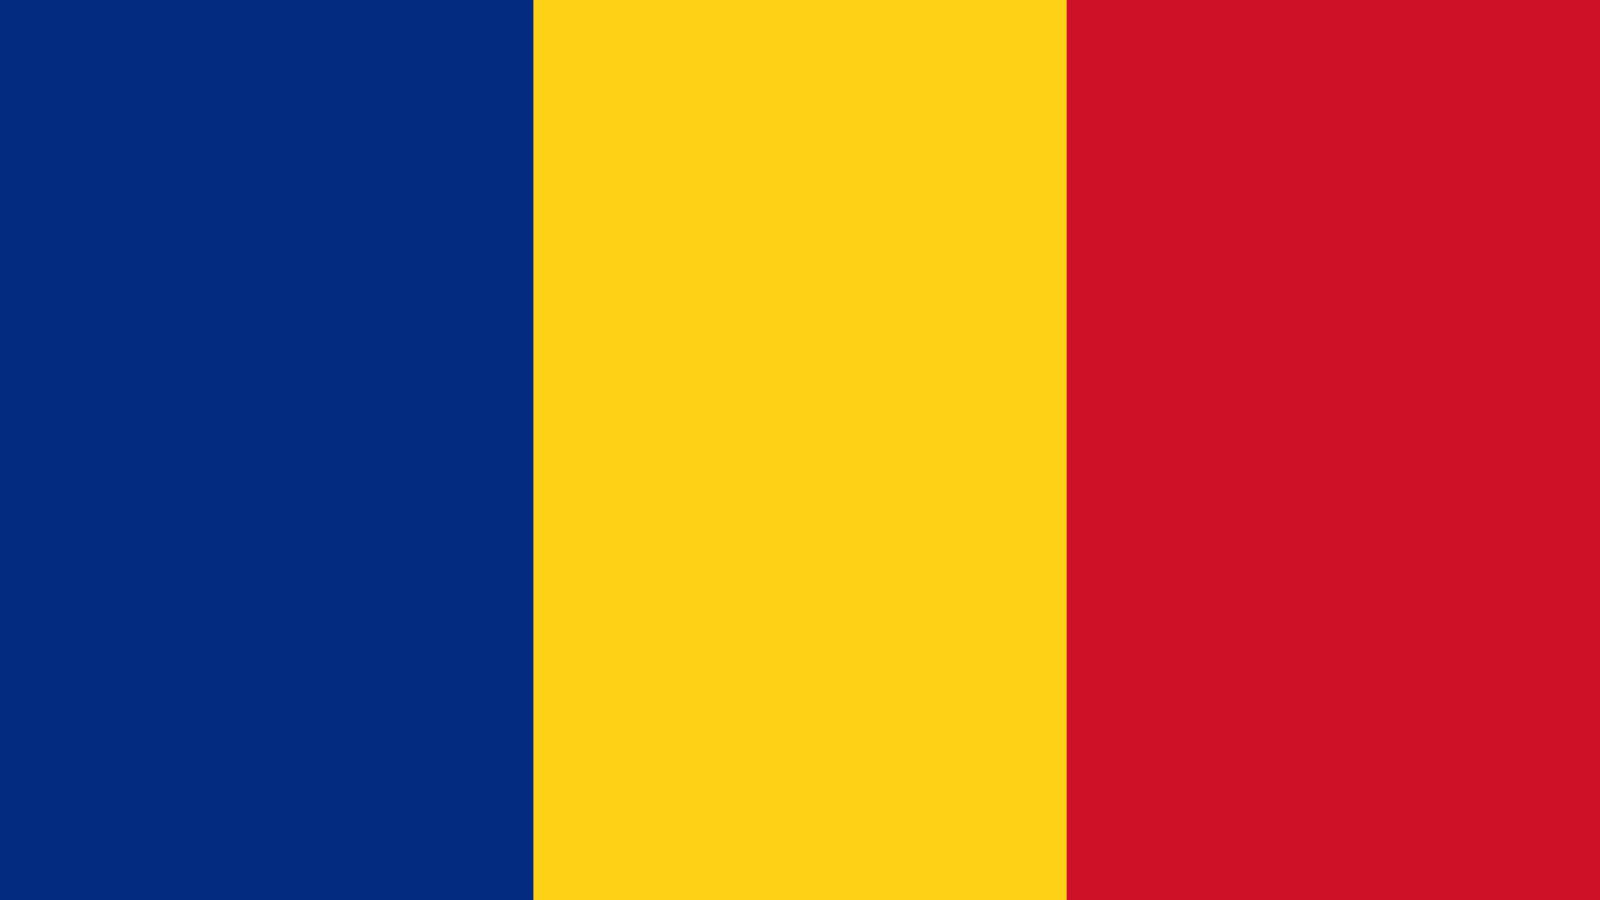 De president van Roemenië covid-19 quarantaine